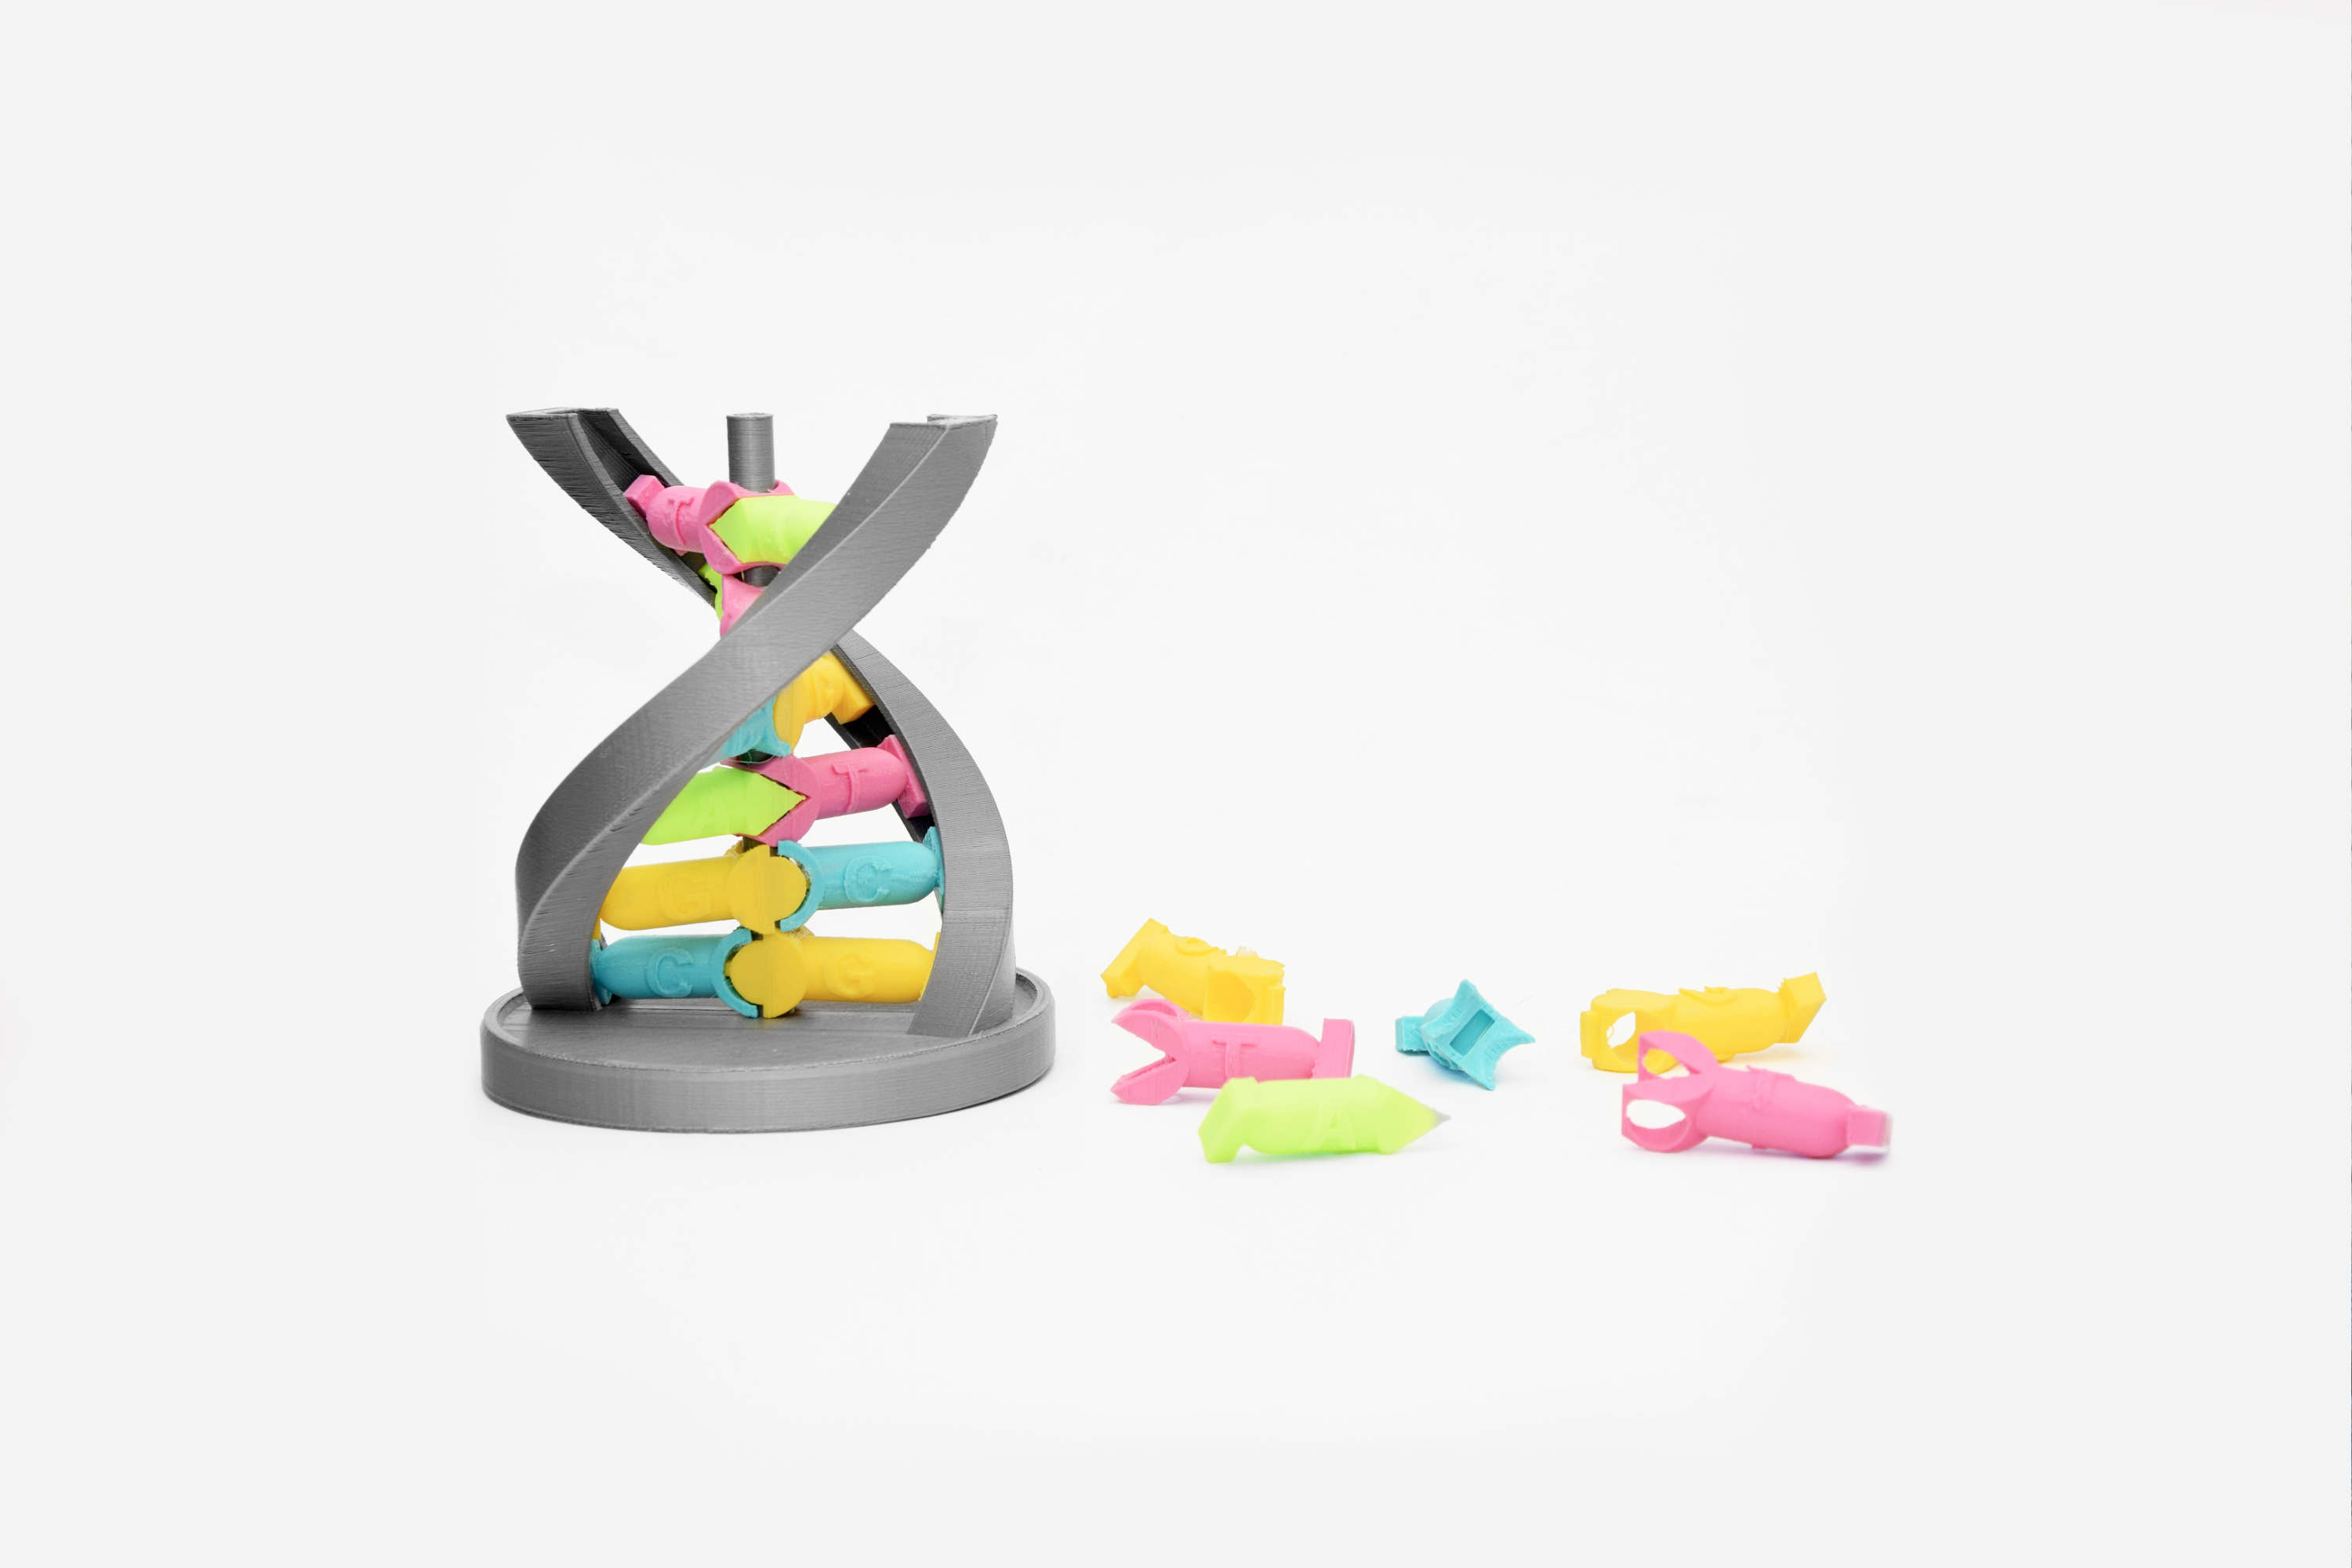 Educational DNA Model, design by Matthijs Kok | Cubify, 2014